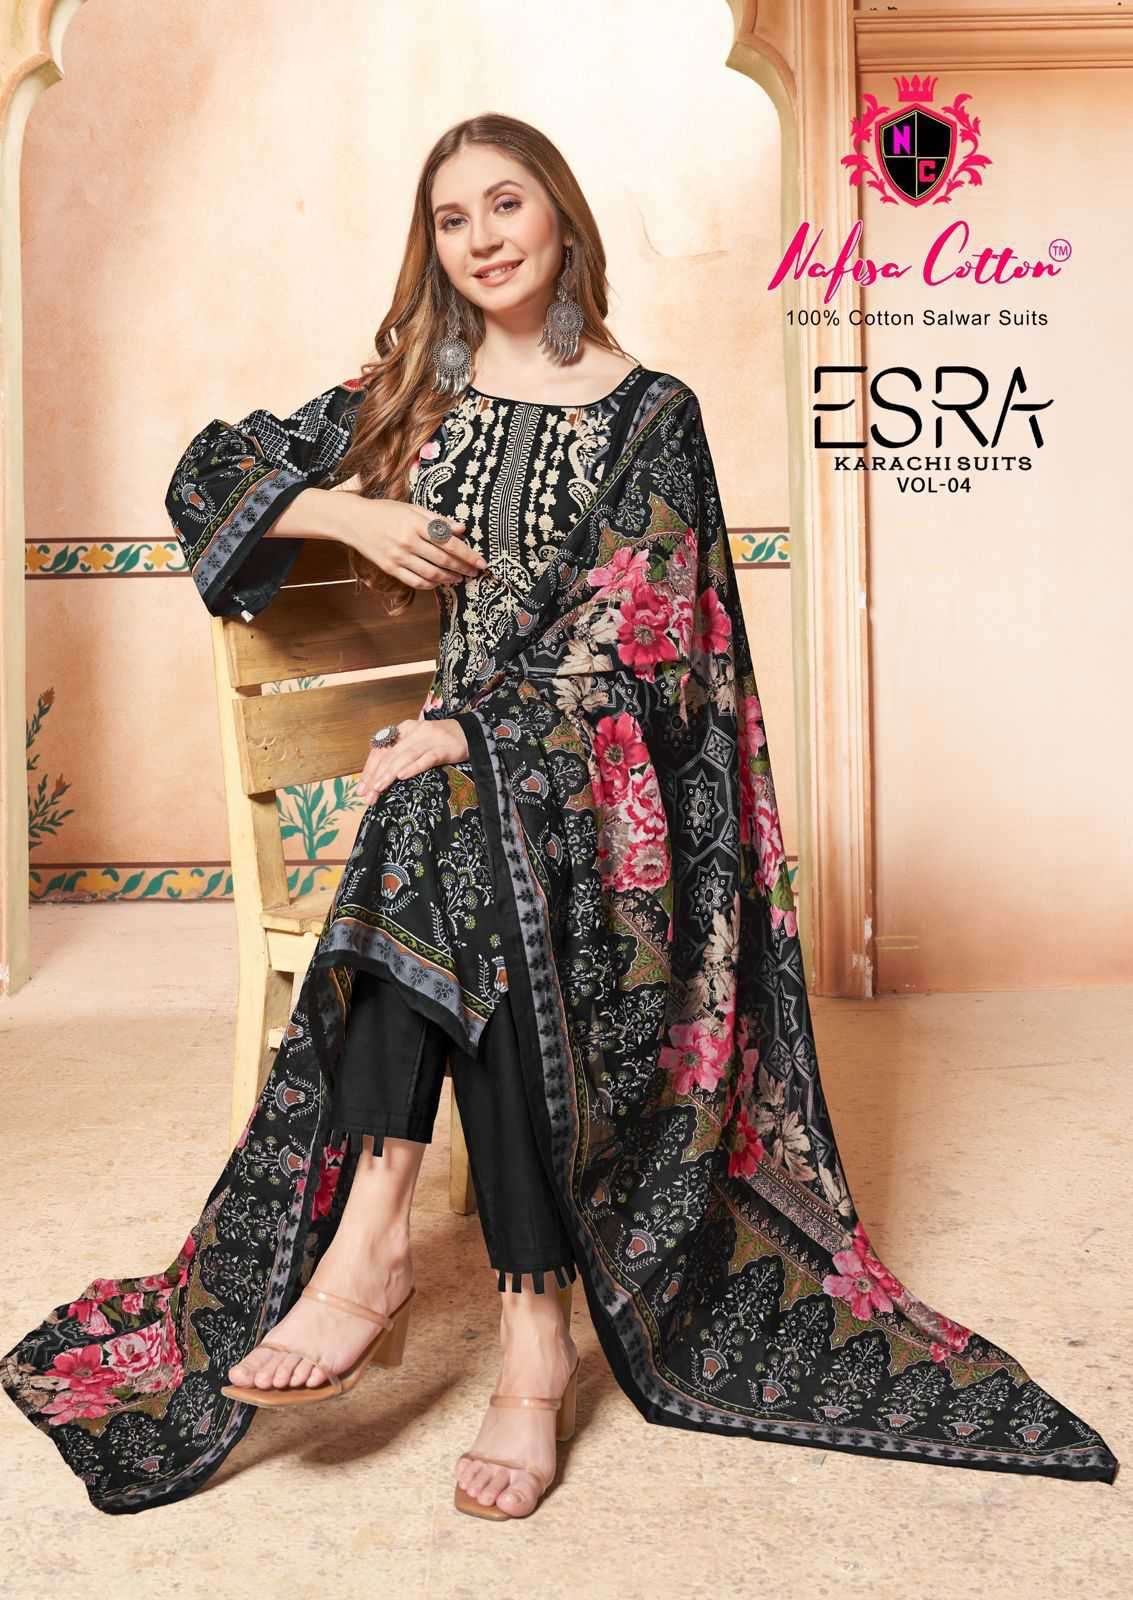 Nafisa Cotton Esra Vol 4 Karachi Print Cotton Ladies Dress Suppliers